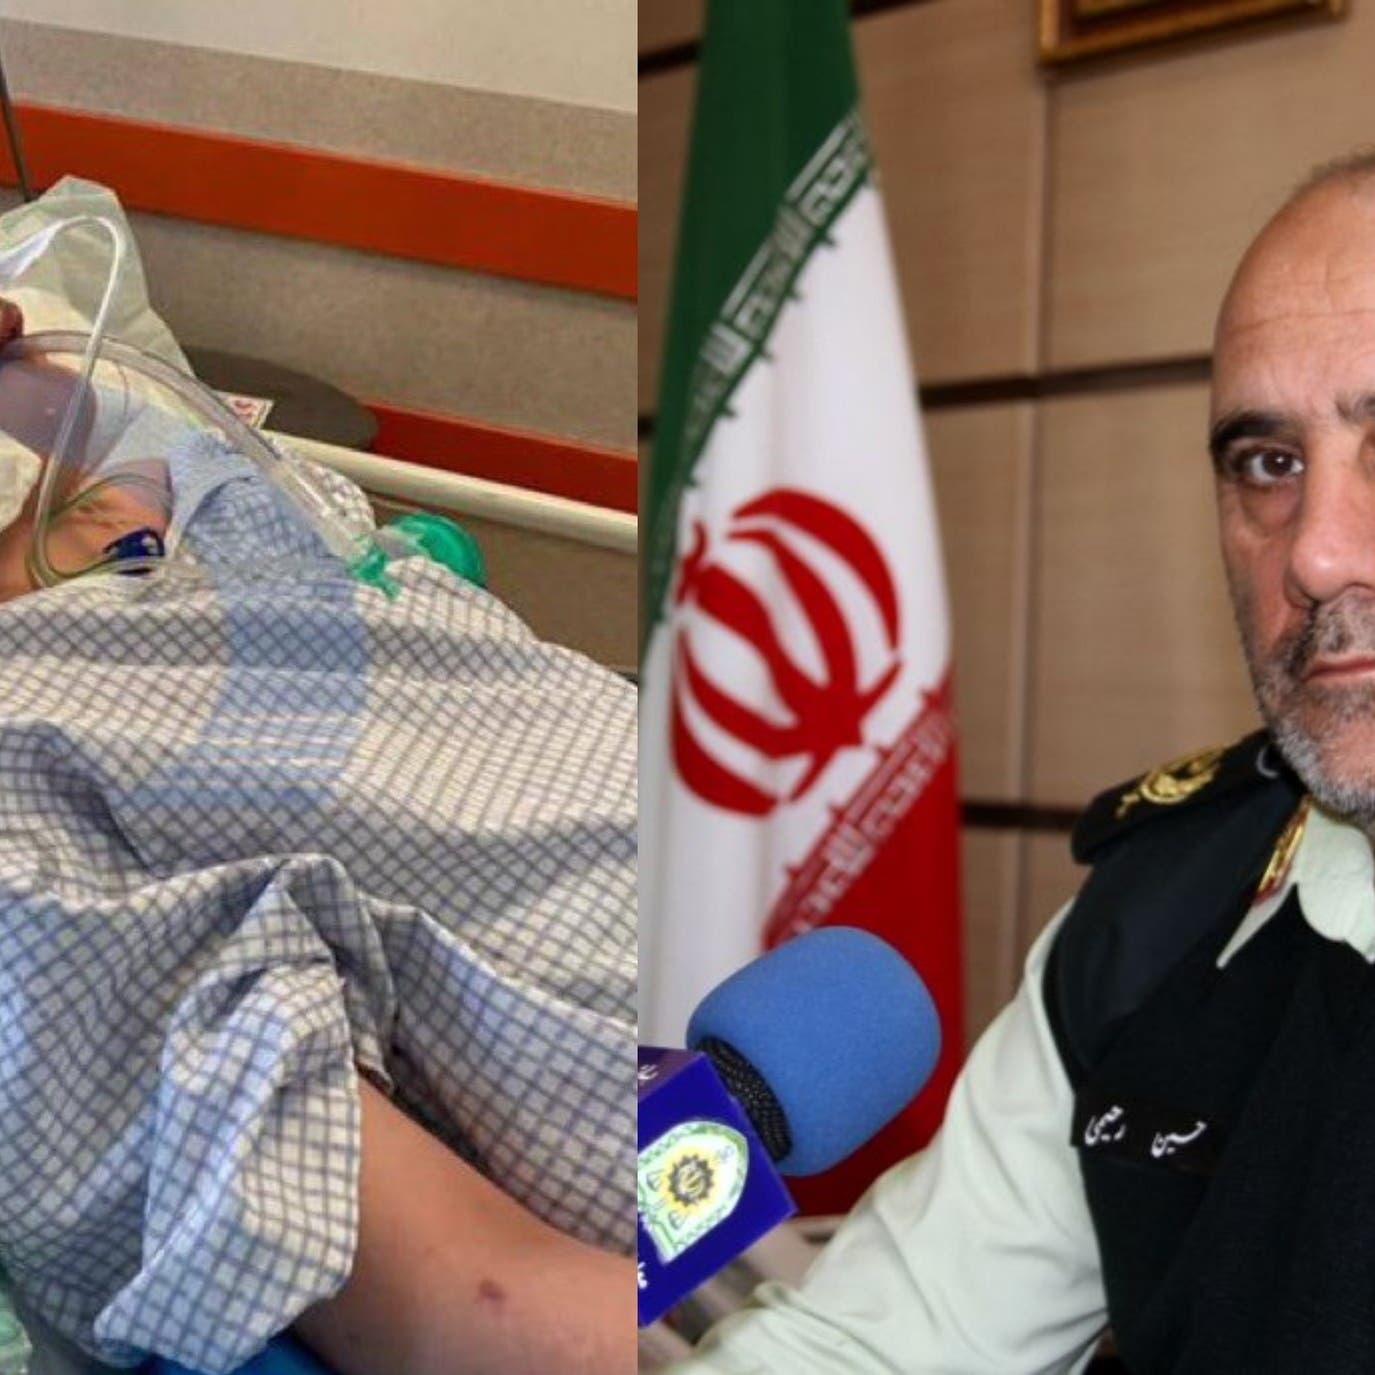 Iran police slams ‘cowardly accusations’: Mahsa Amini ‘dressed inappropriately’